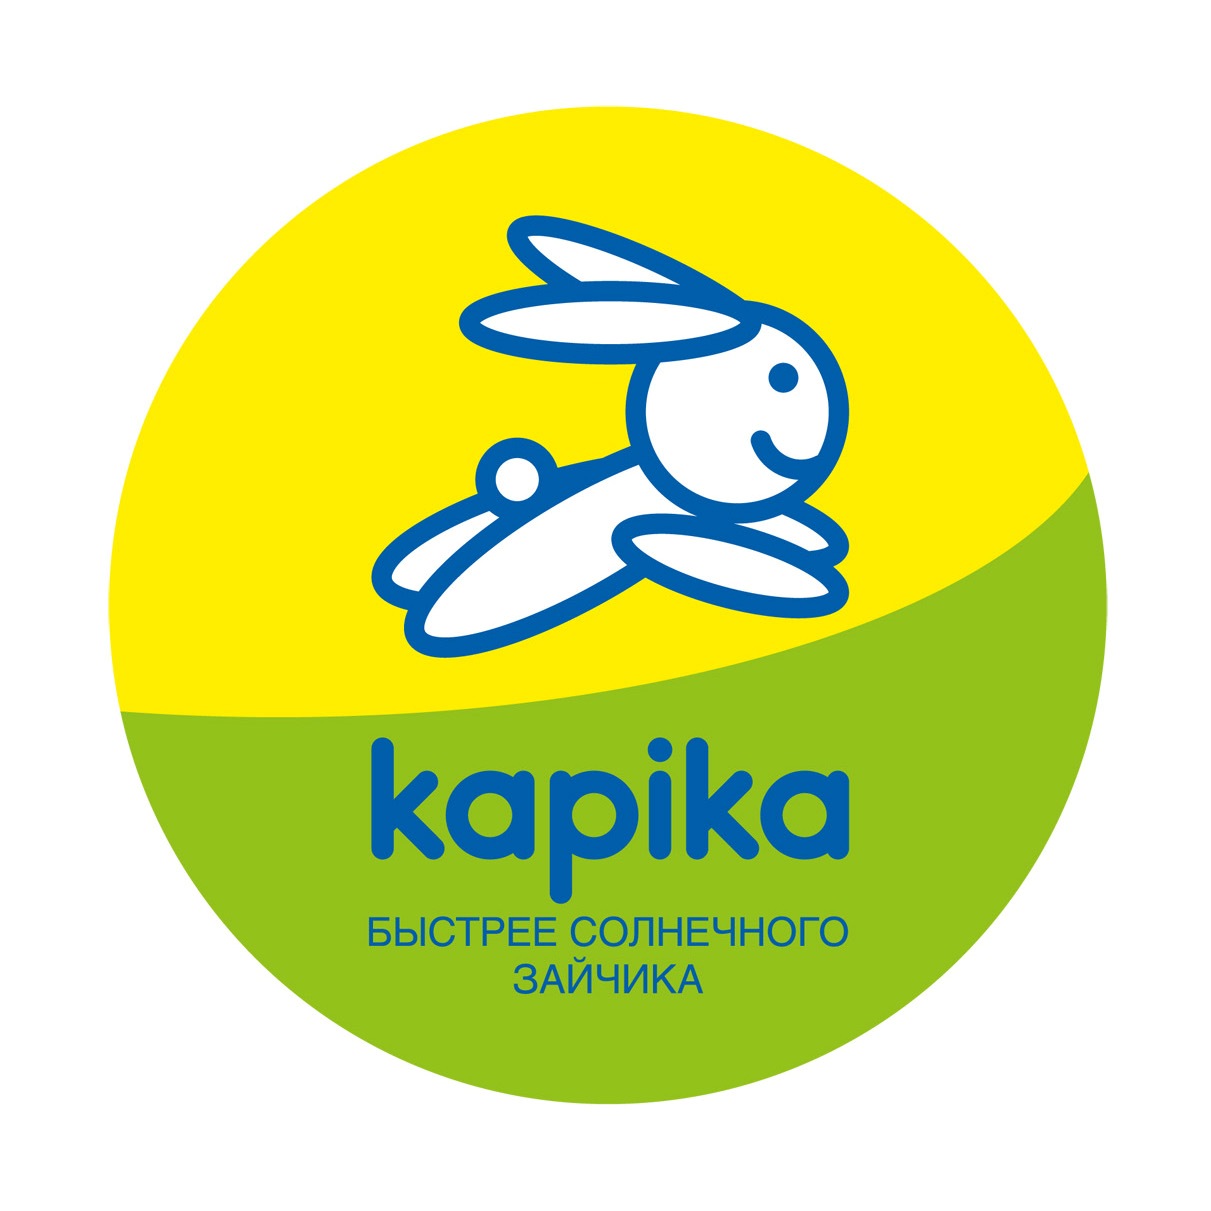 KAPIKA - каталог детской обуви 2020-2021 года | Jacky Kids